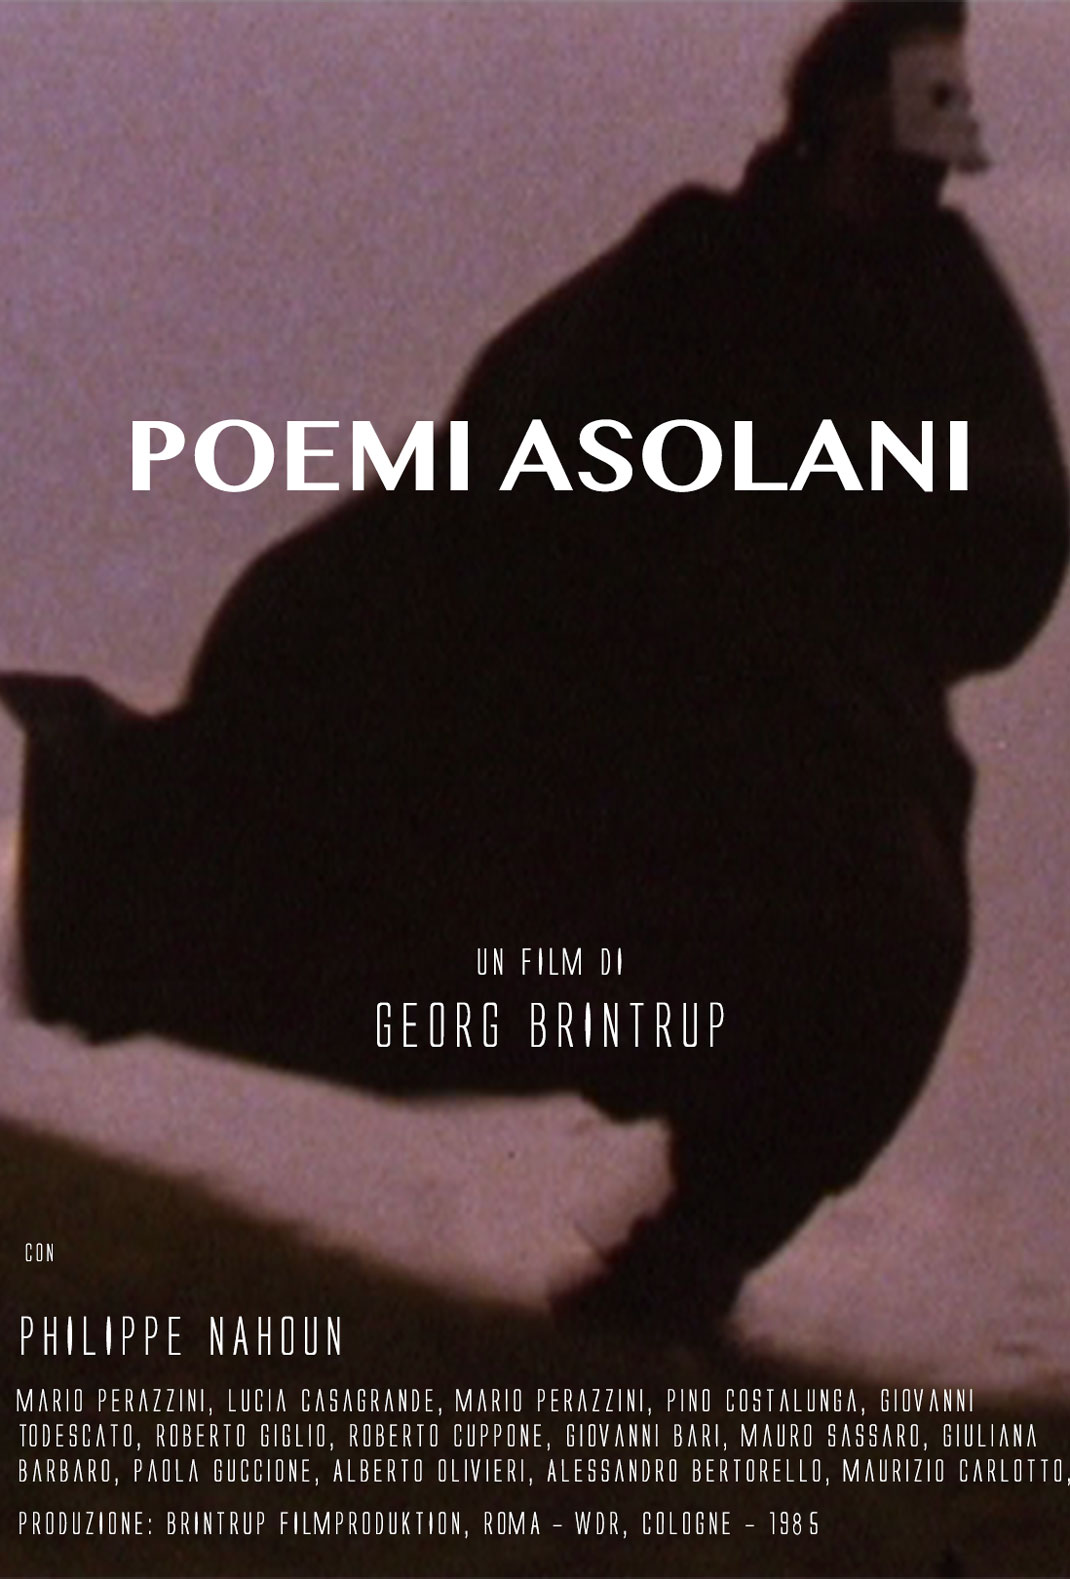 Poster of the film POEMI ASOLANI